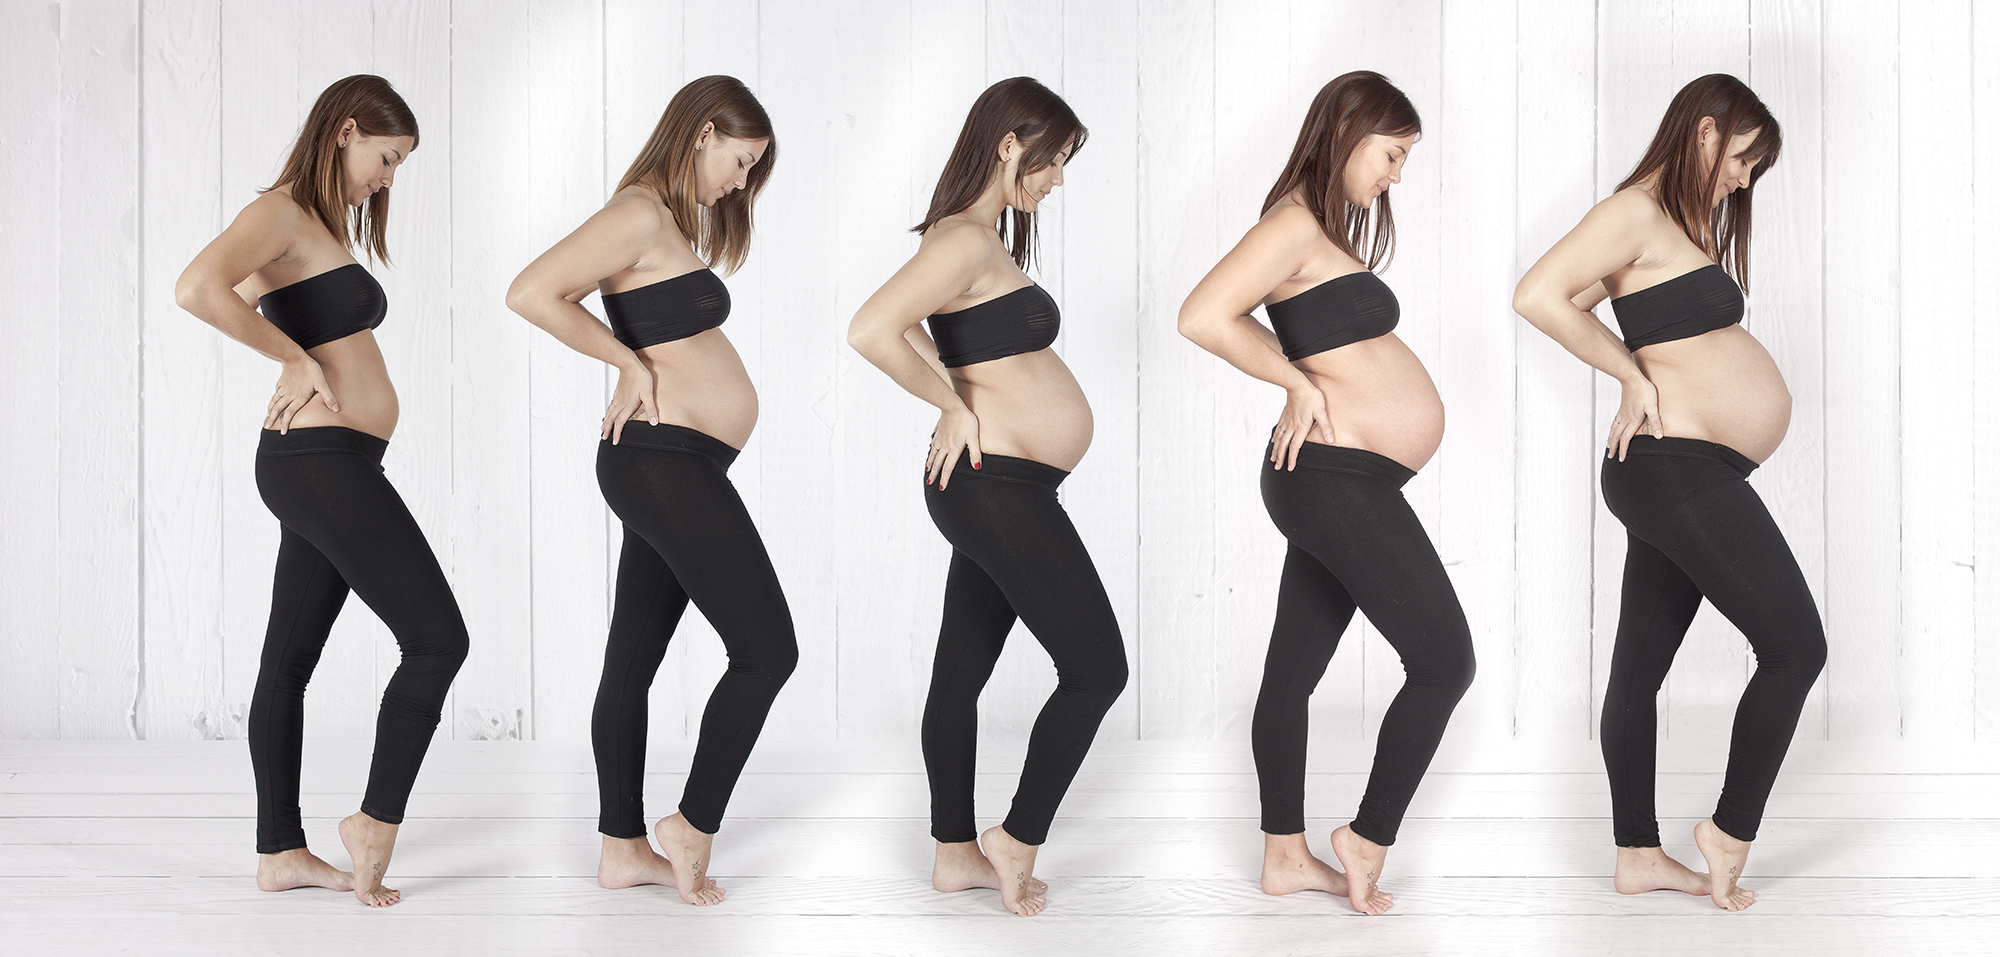 clcis-sesion-fotos-evolucion-embarazo